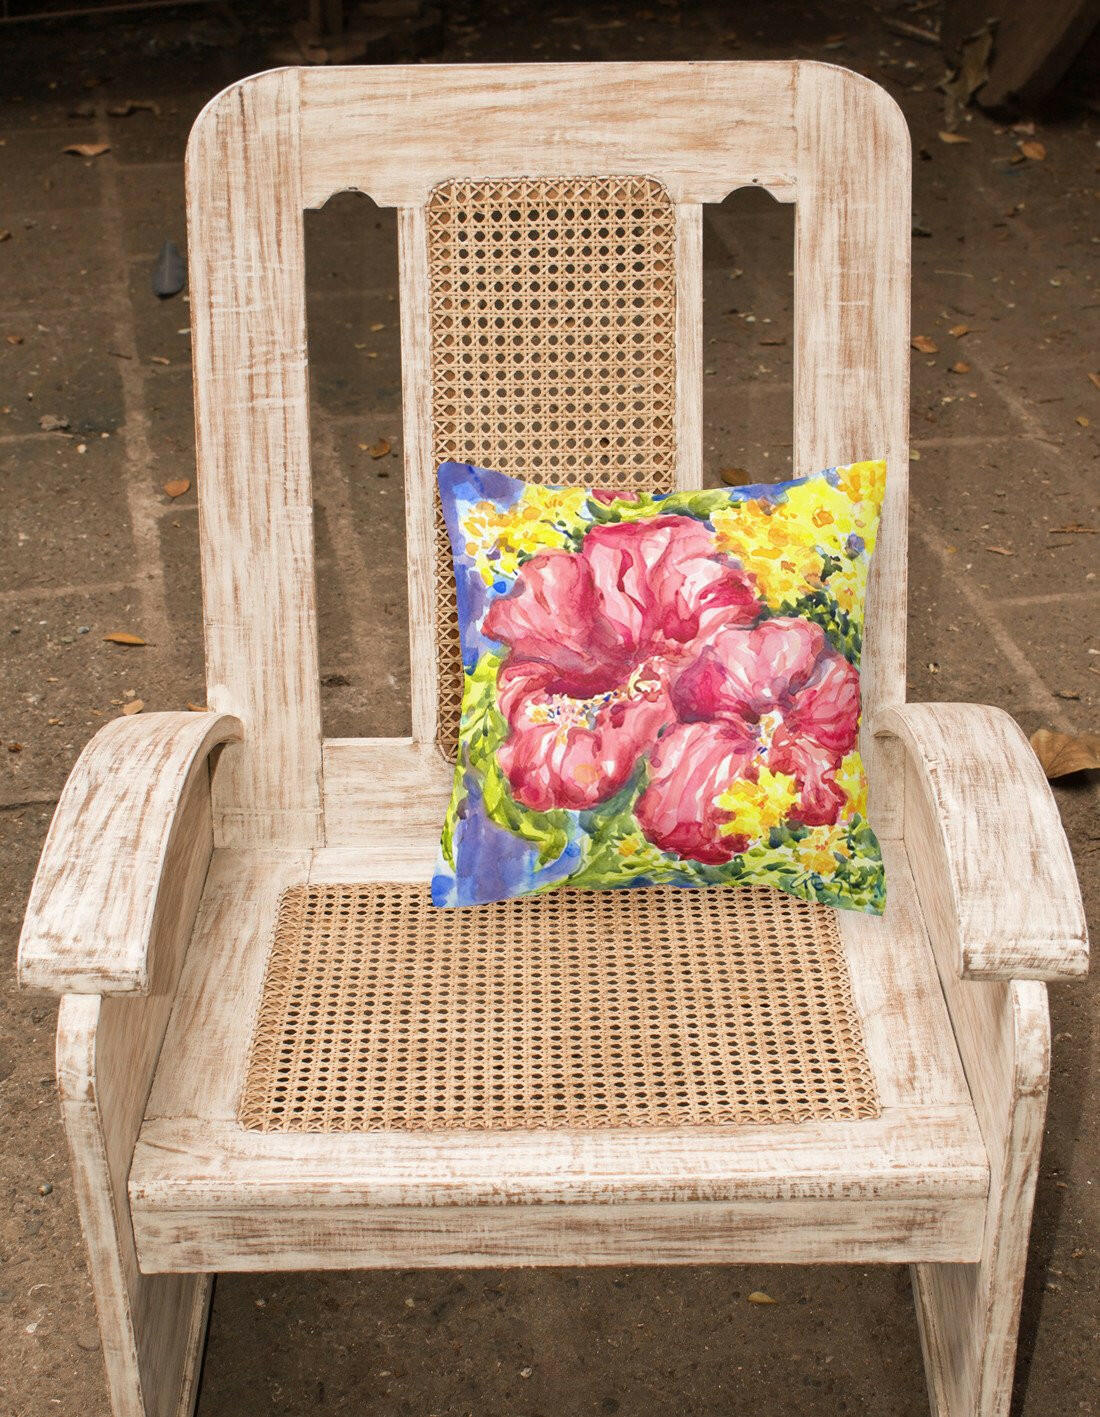 Flower - Hibiscus Decorative   Canvas Fabric Pillow - the-store.com